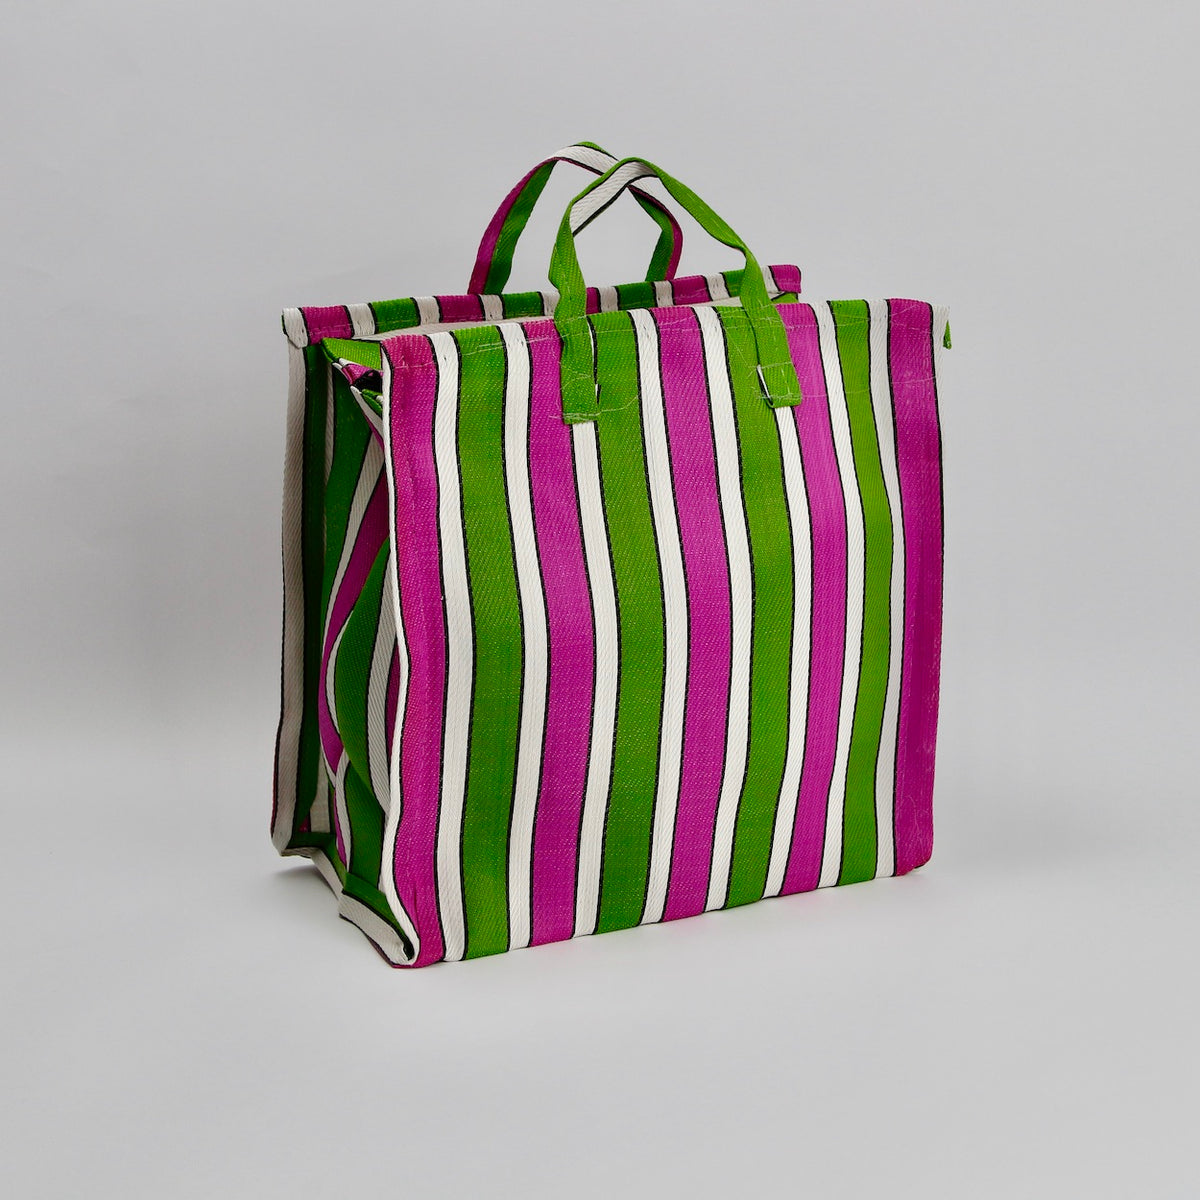 Size 2 Striped Market Bag - Hot Pink/Green/White